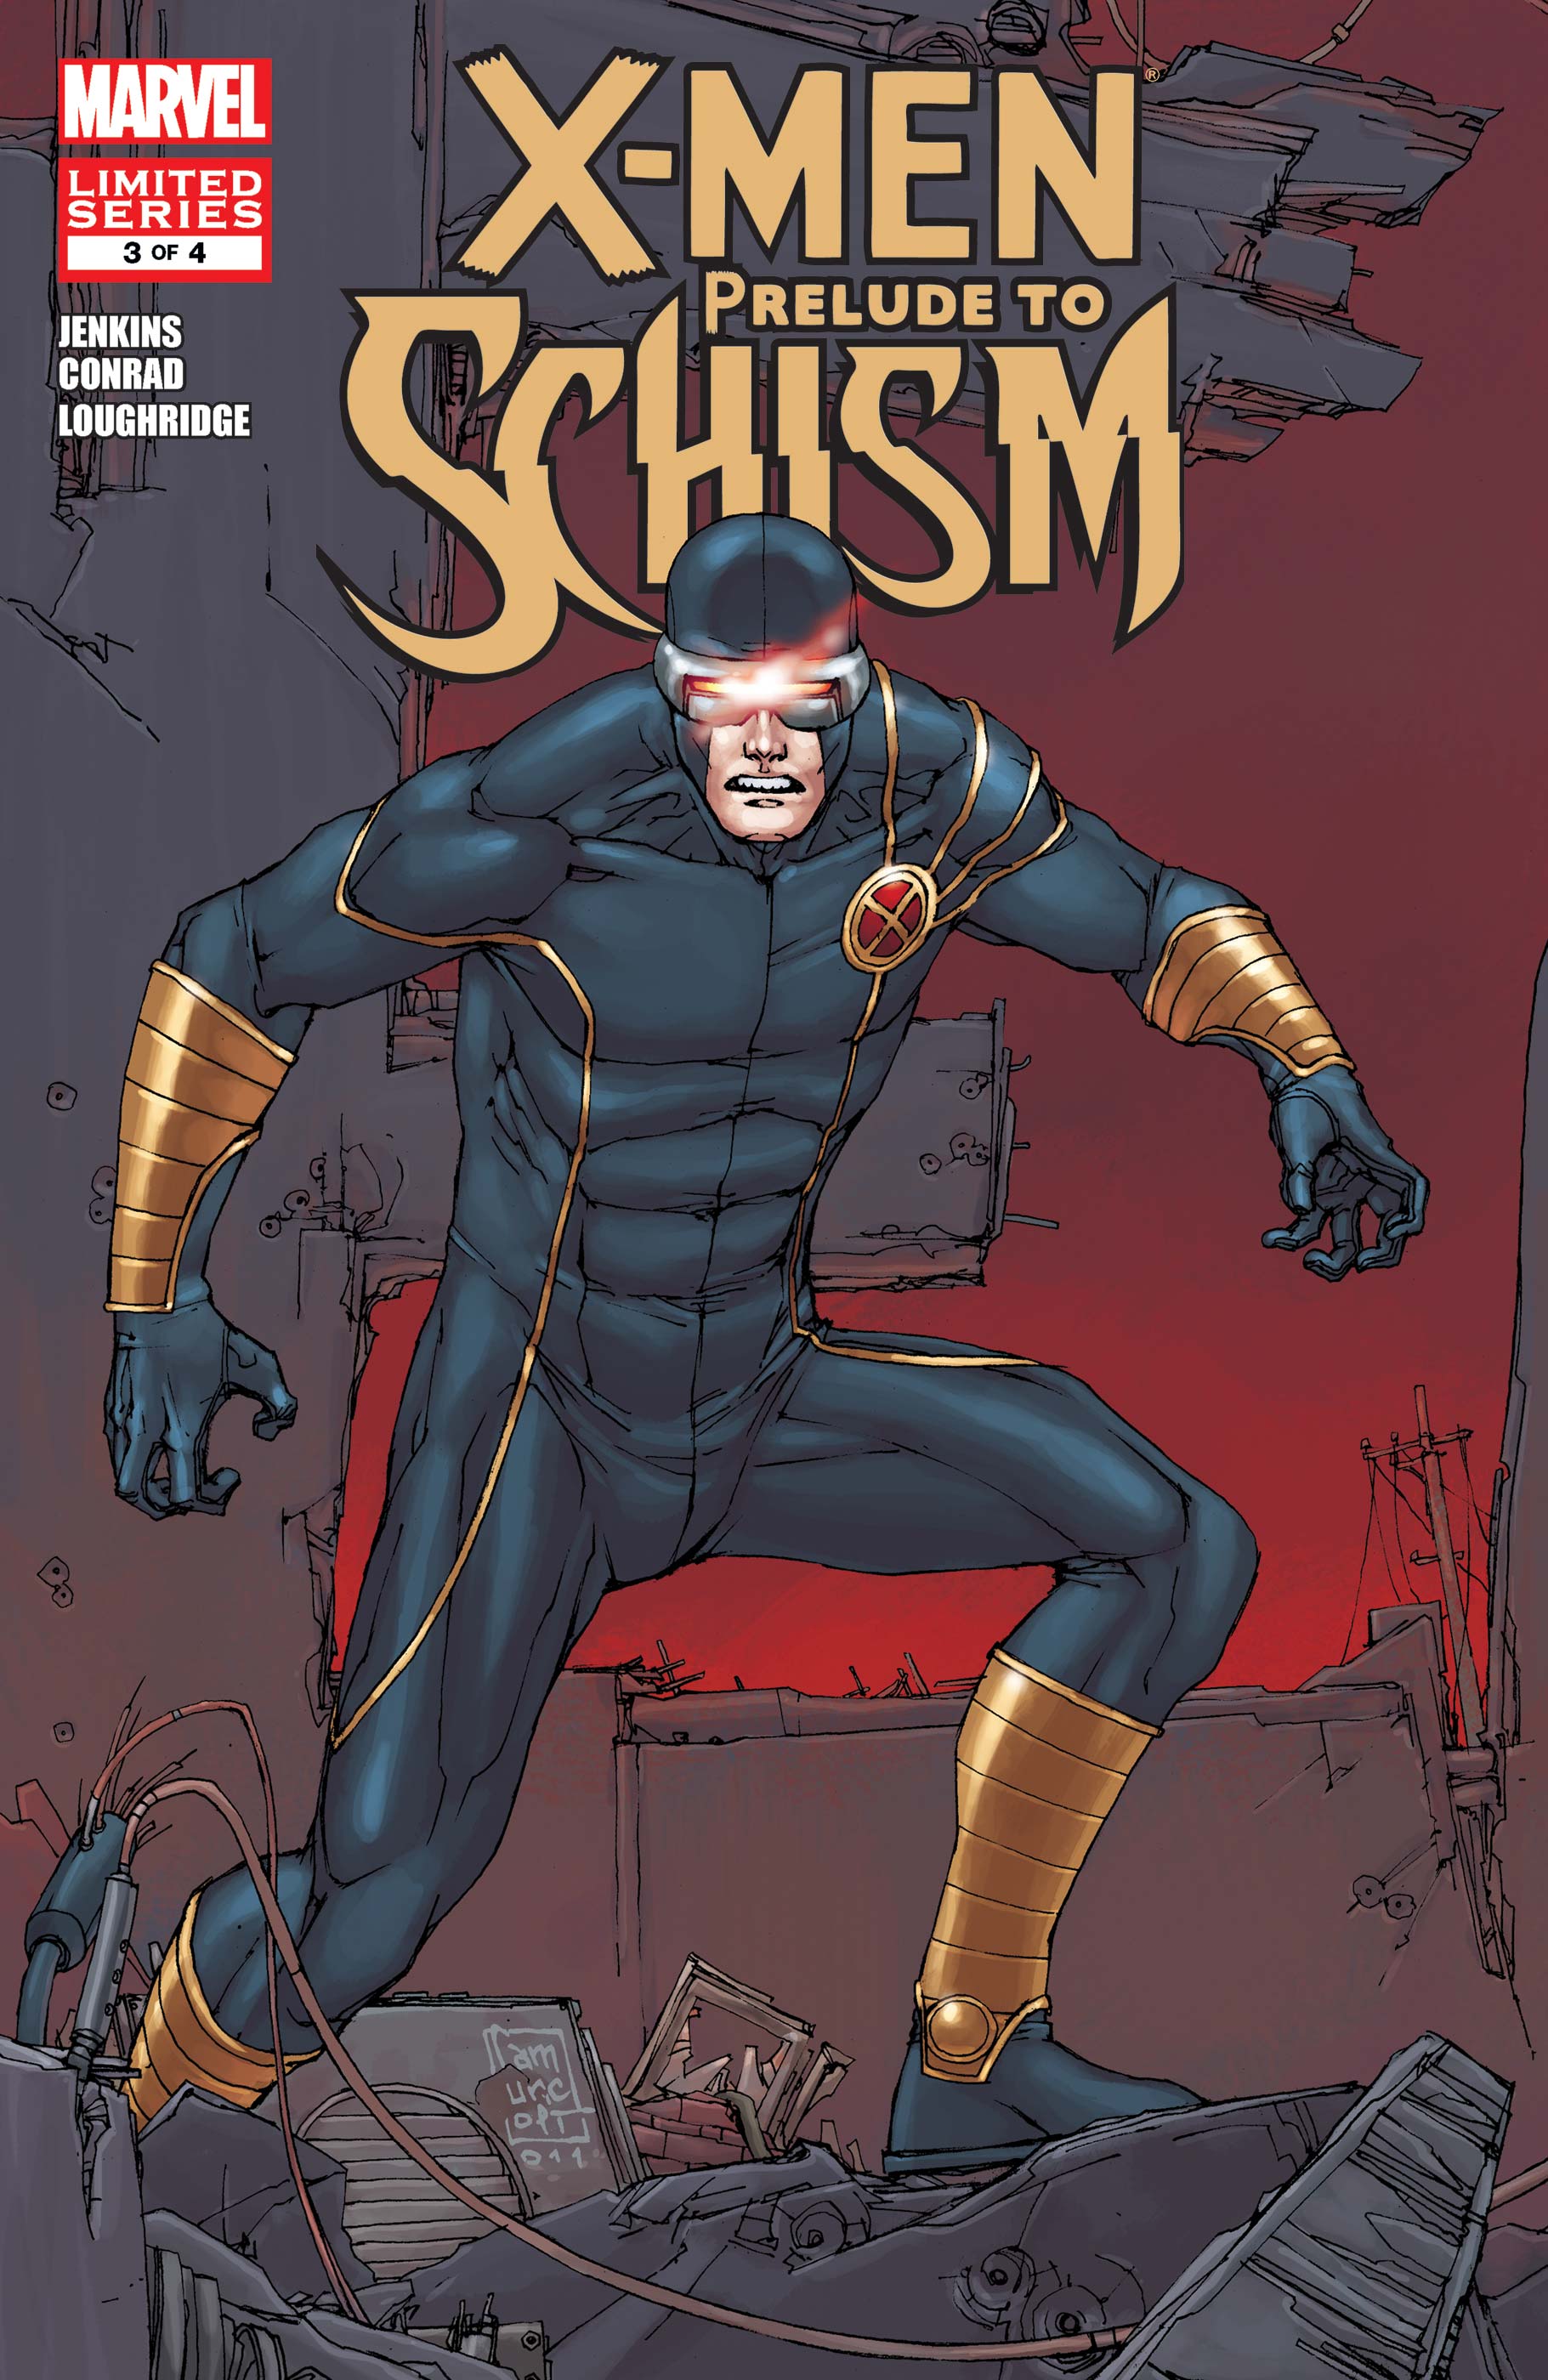 X-Men: Prelude to Schism (2011) #3